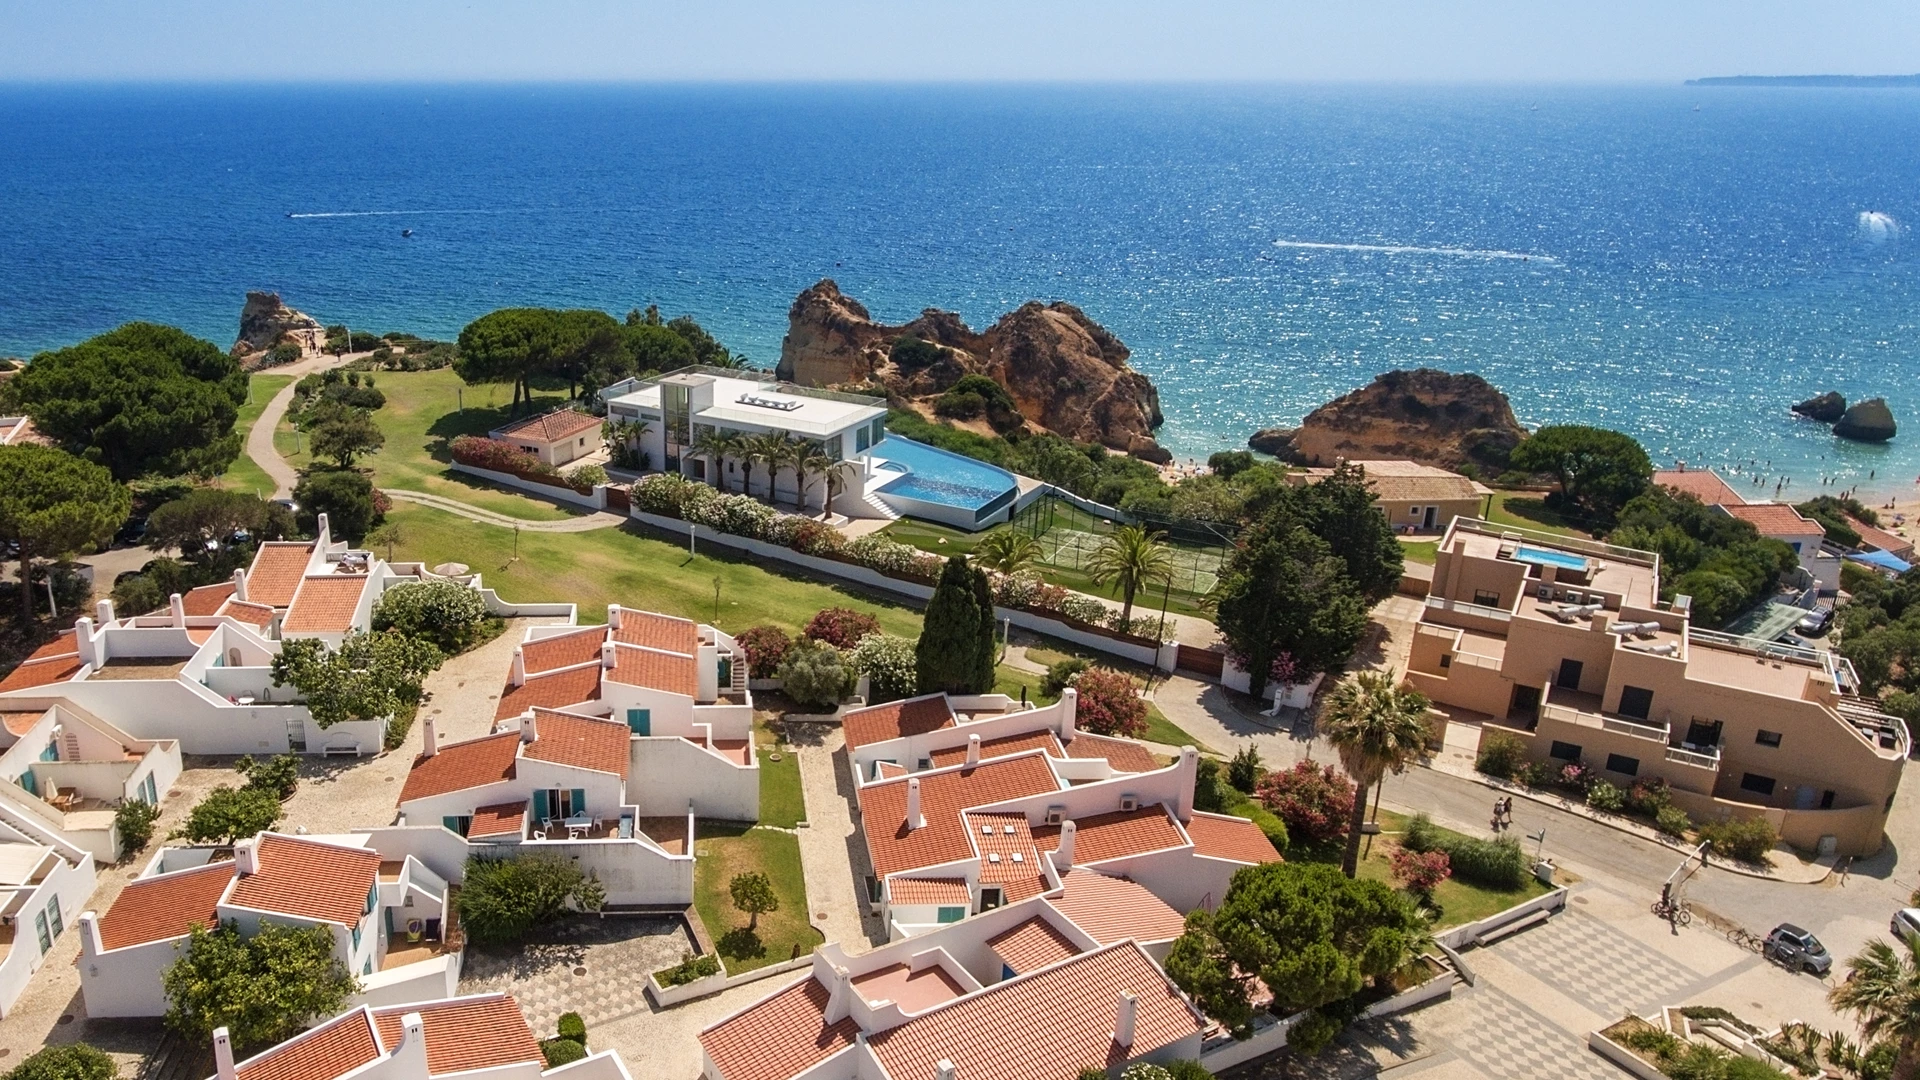 Algarve and Alentejo - We are looking for properties